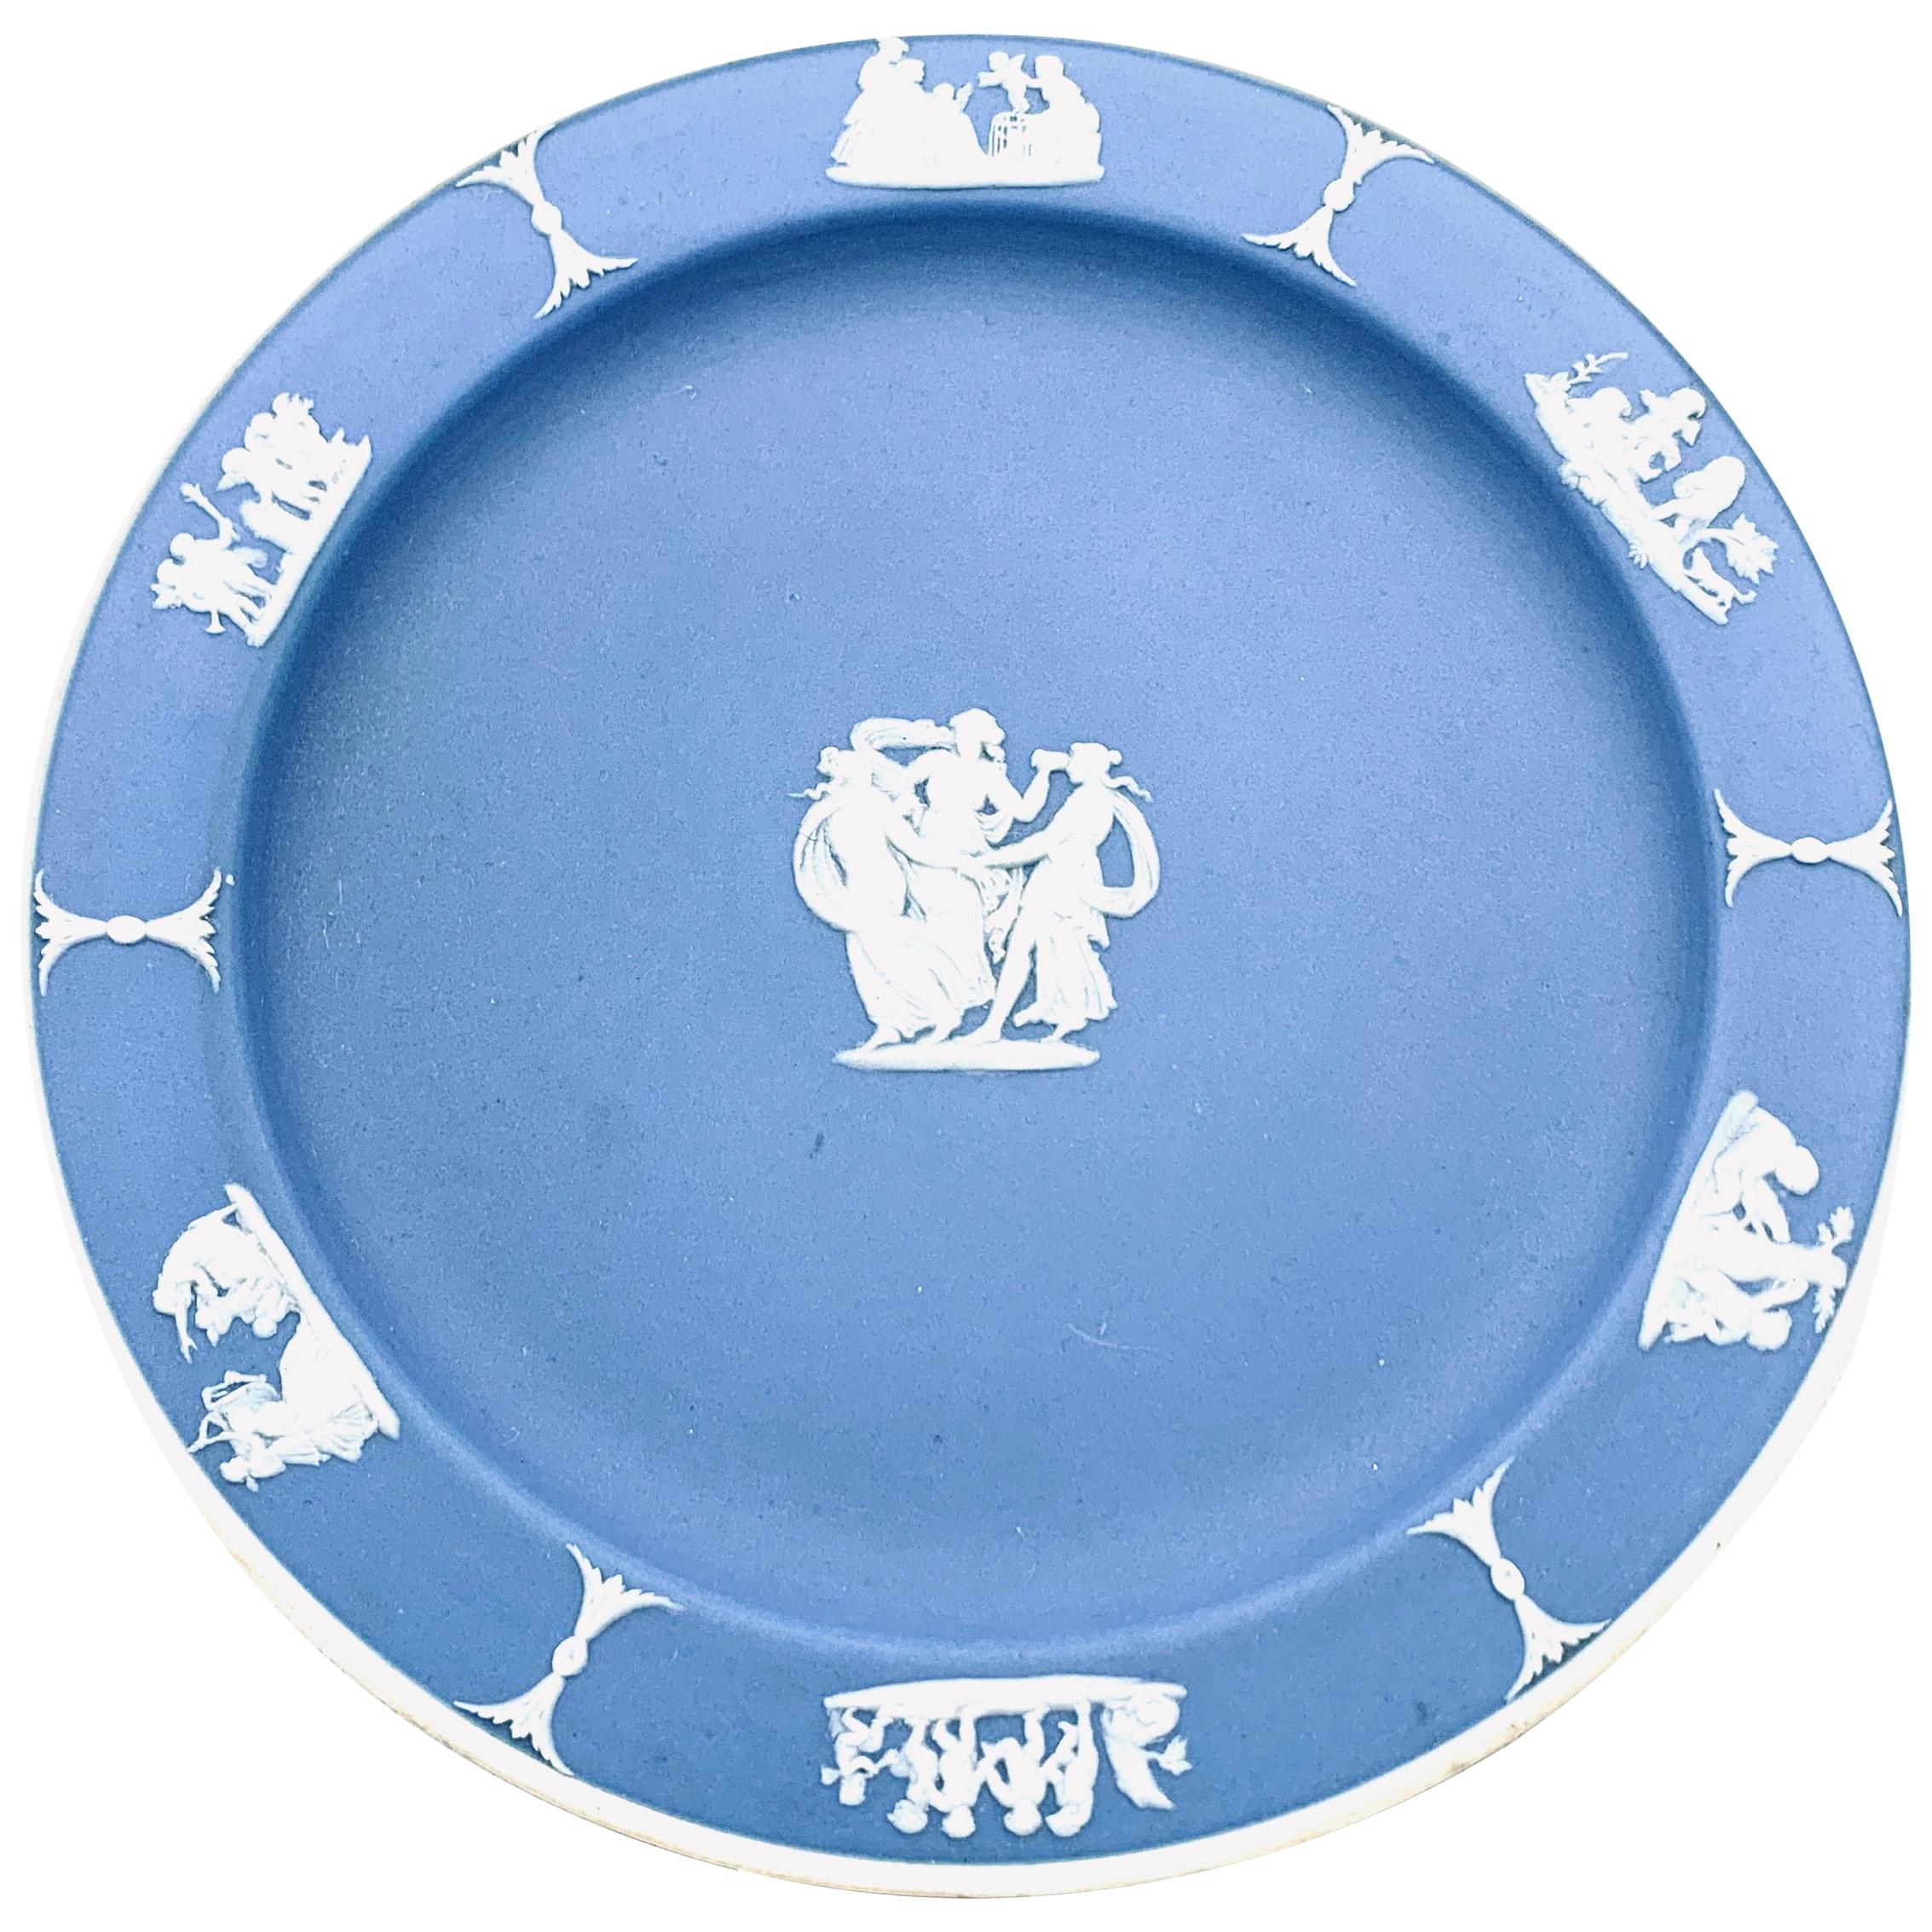 Wedgwood "The Three Graces" Pattern Blue Dessert/Pie Plate 7" 